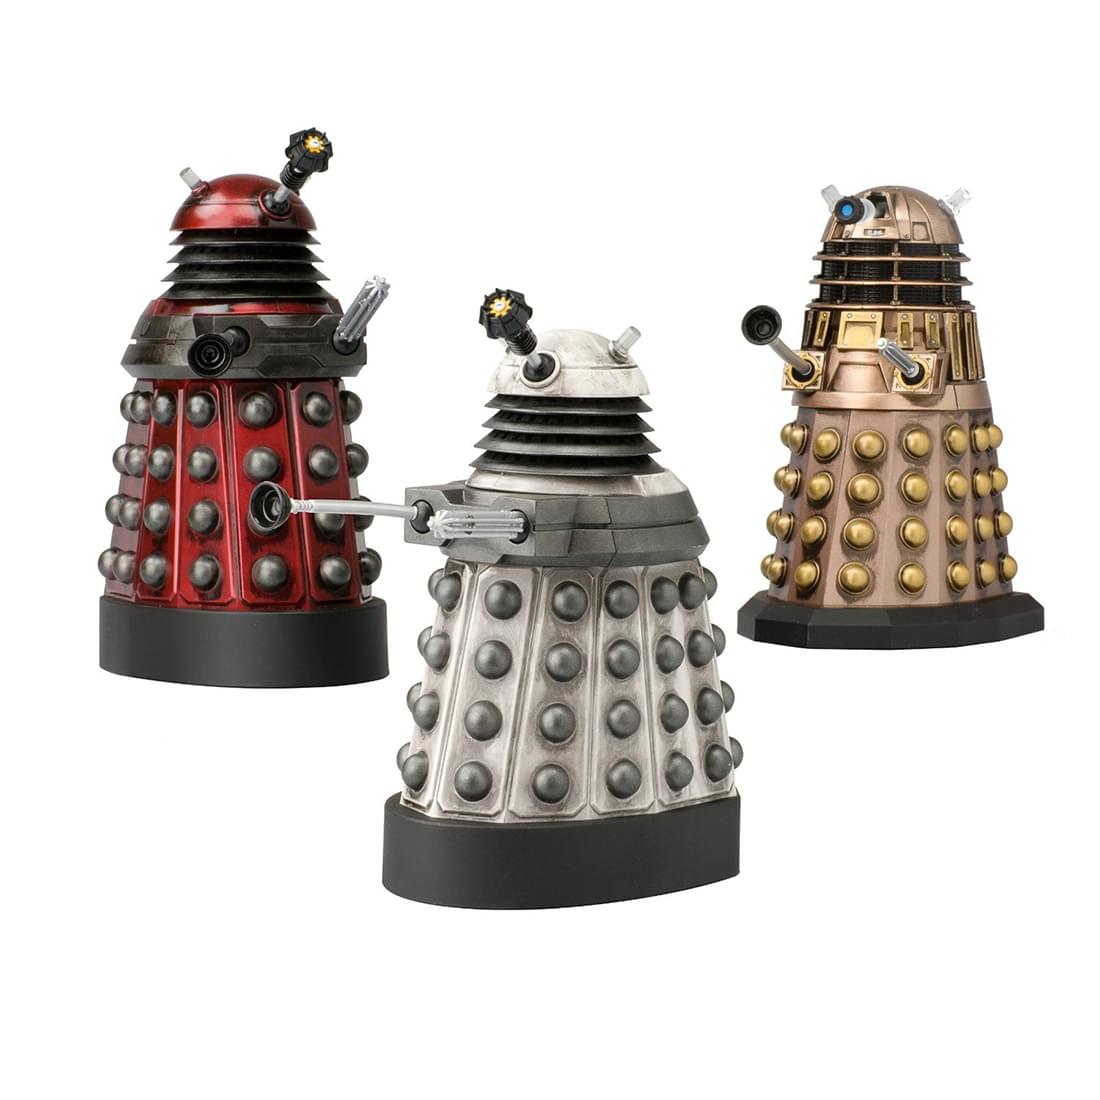 Doctor Who Asylum of the Daleks 5-6" Action Figure Set